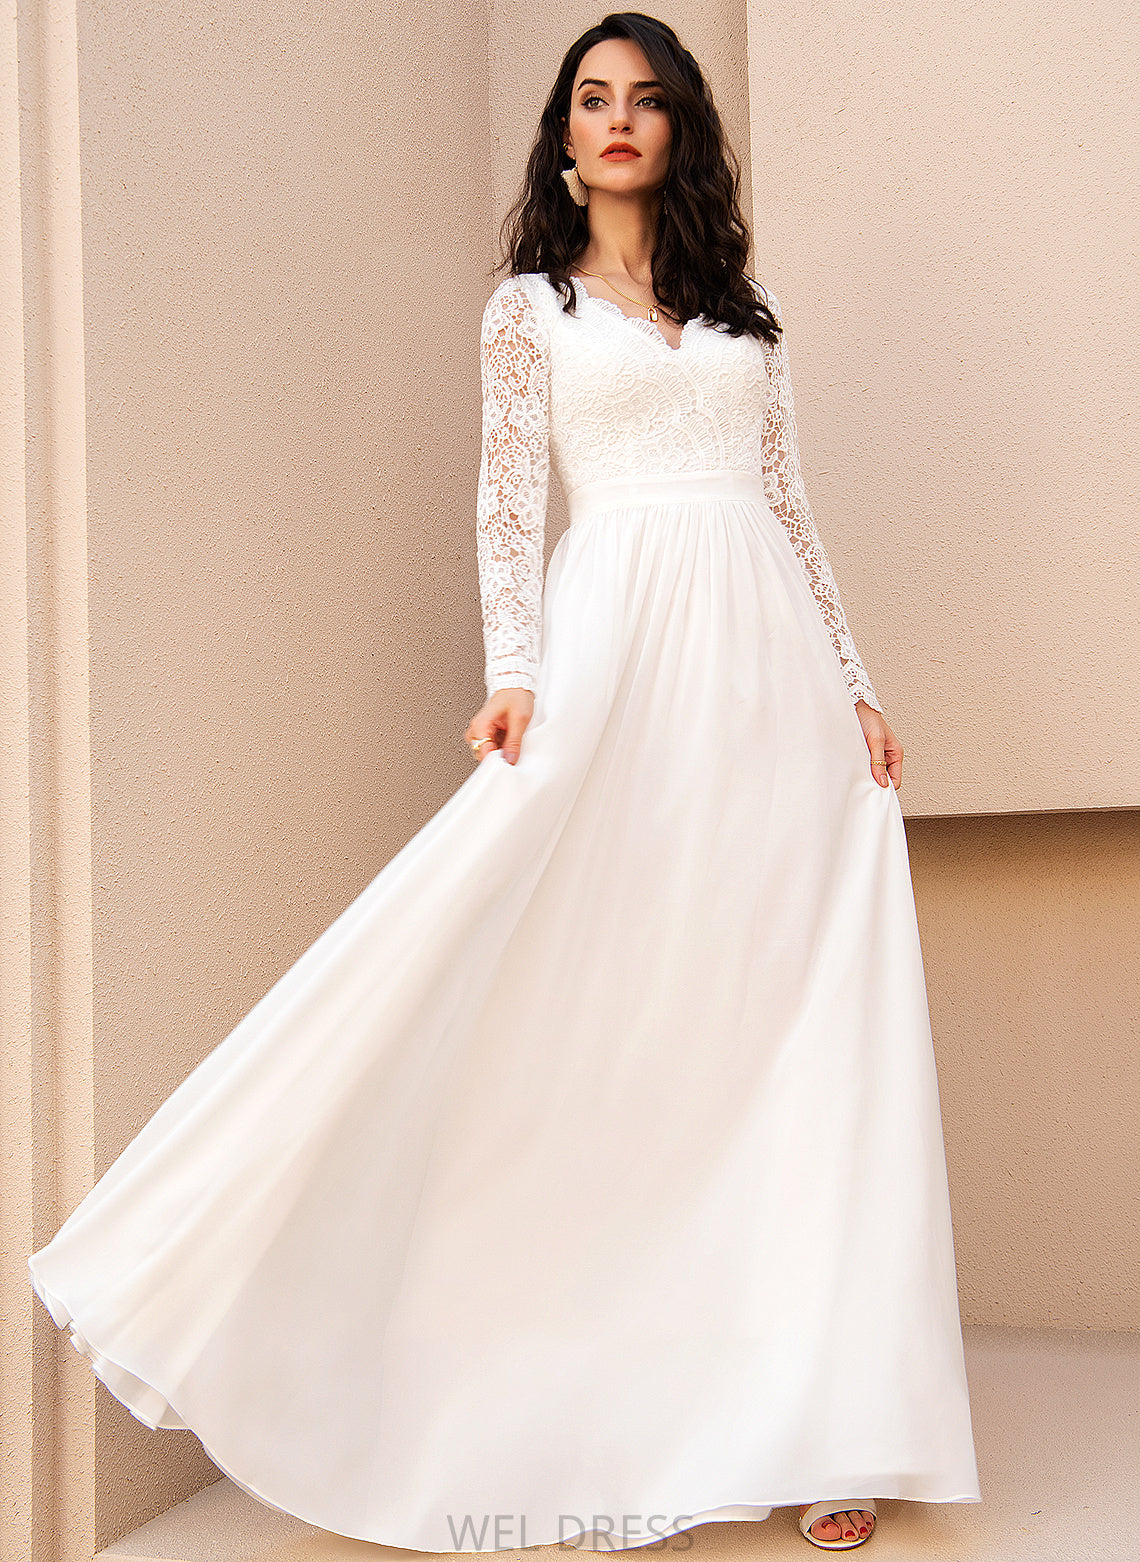 Dress A-Line V-neck Wedding With Chiffon Lace Monica Wedding Dresses Floor-Length